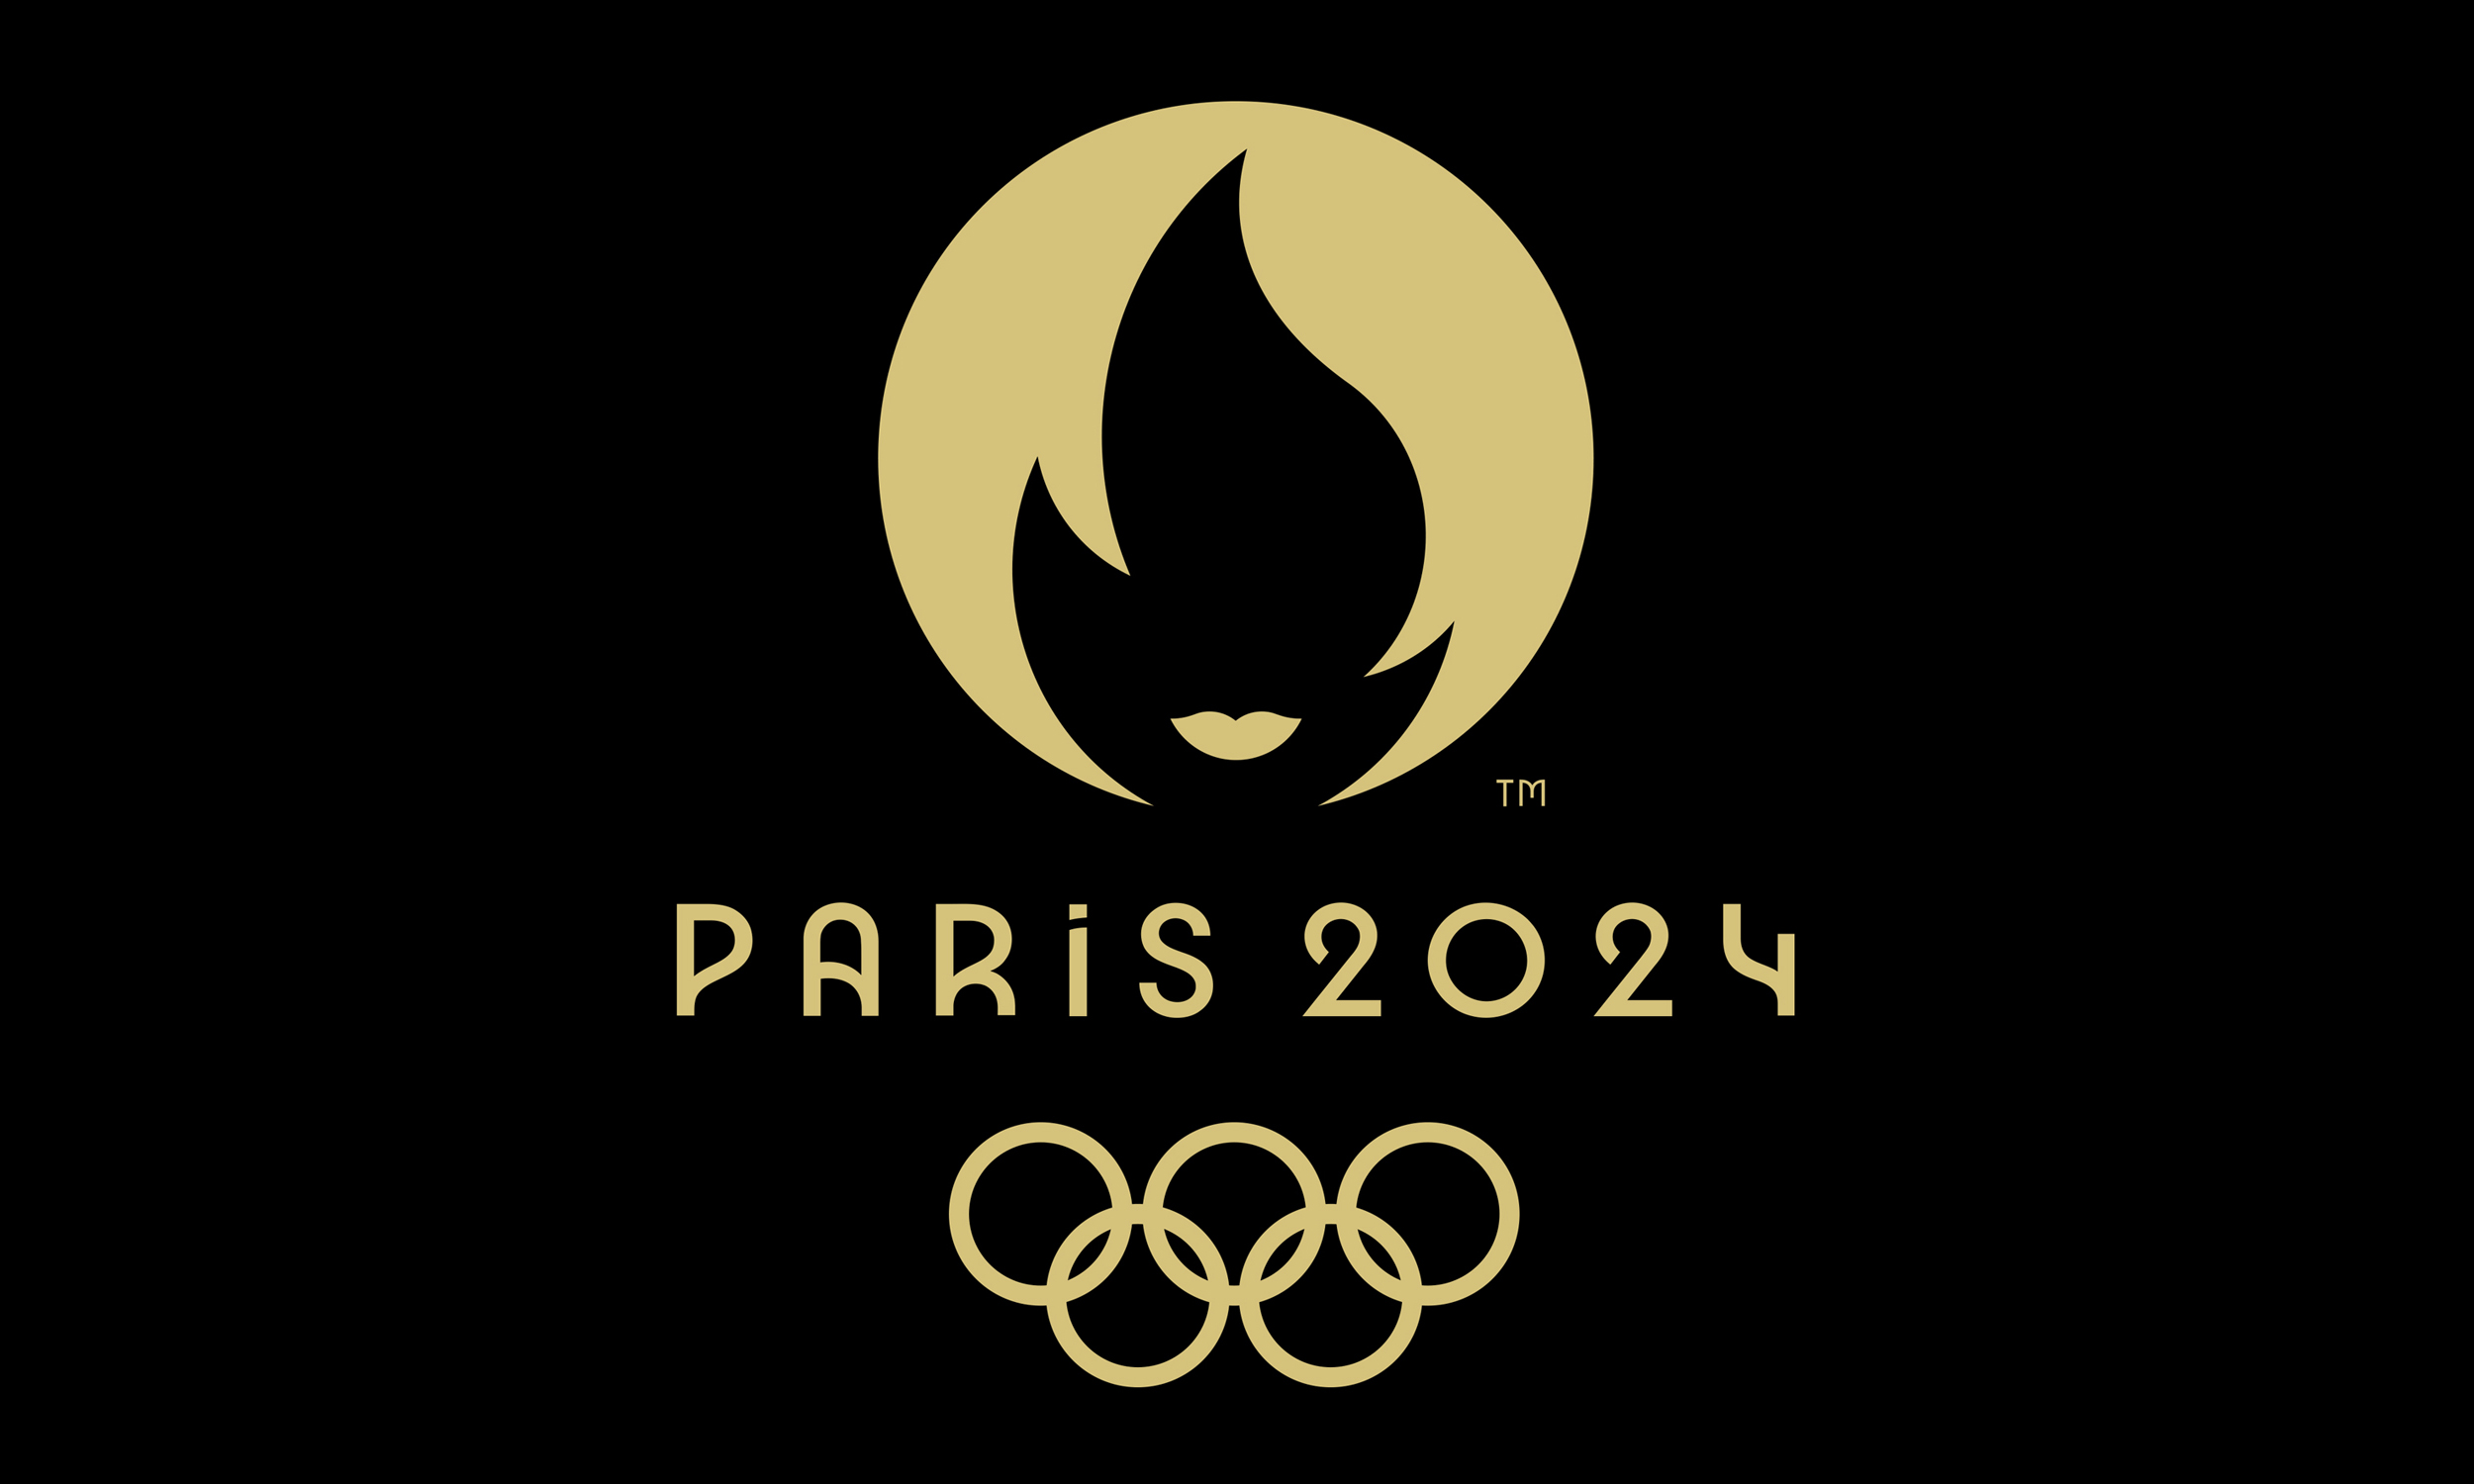 Alternative version of the Paris 2024 Olympic games brand